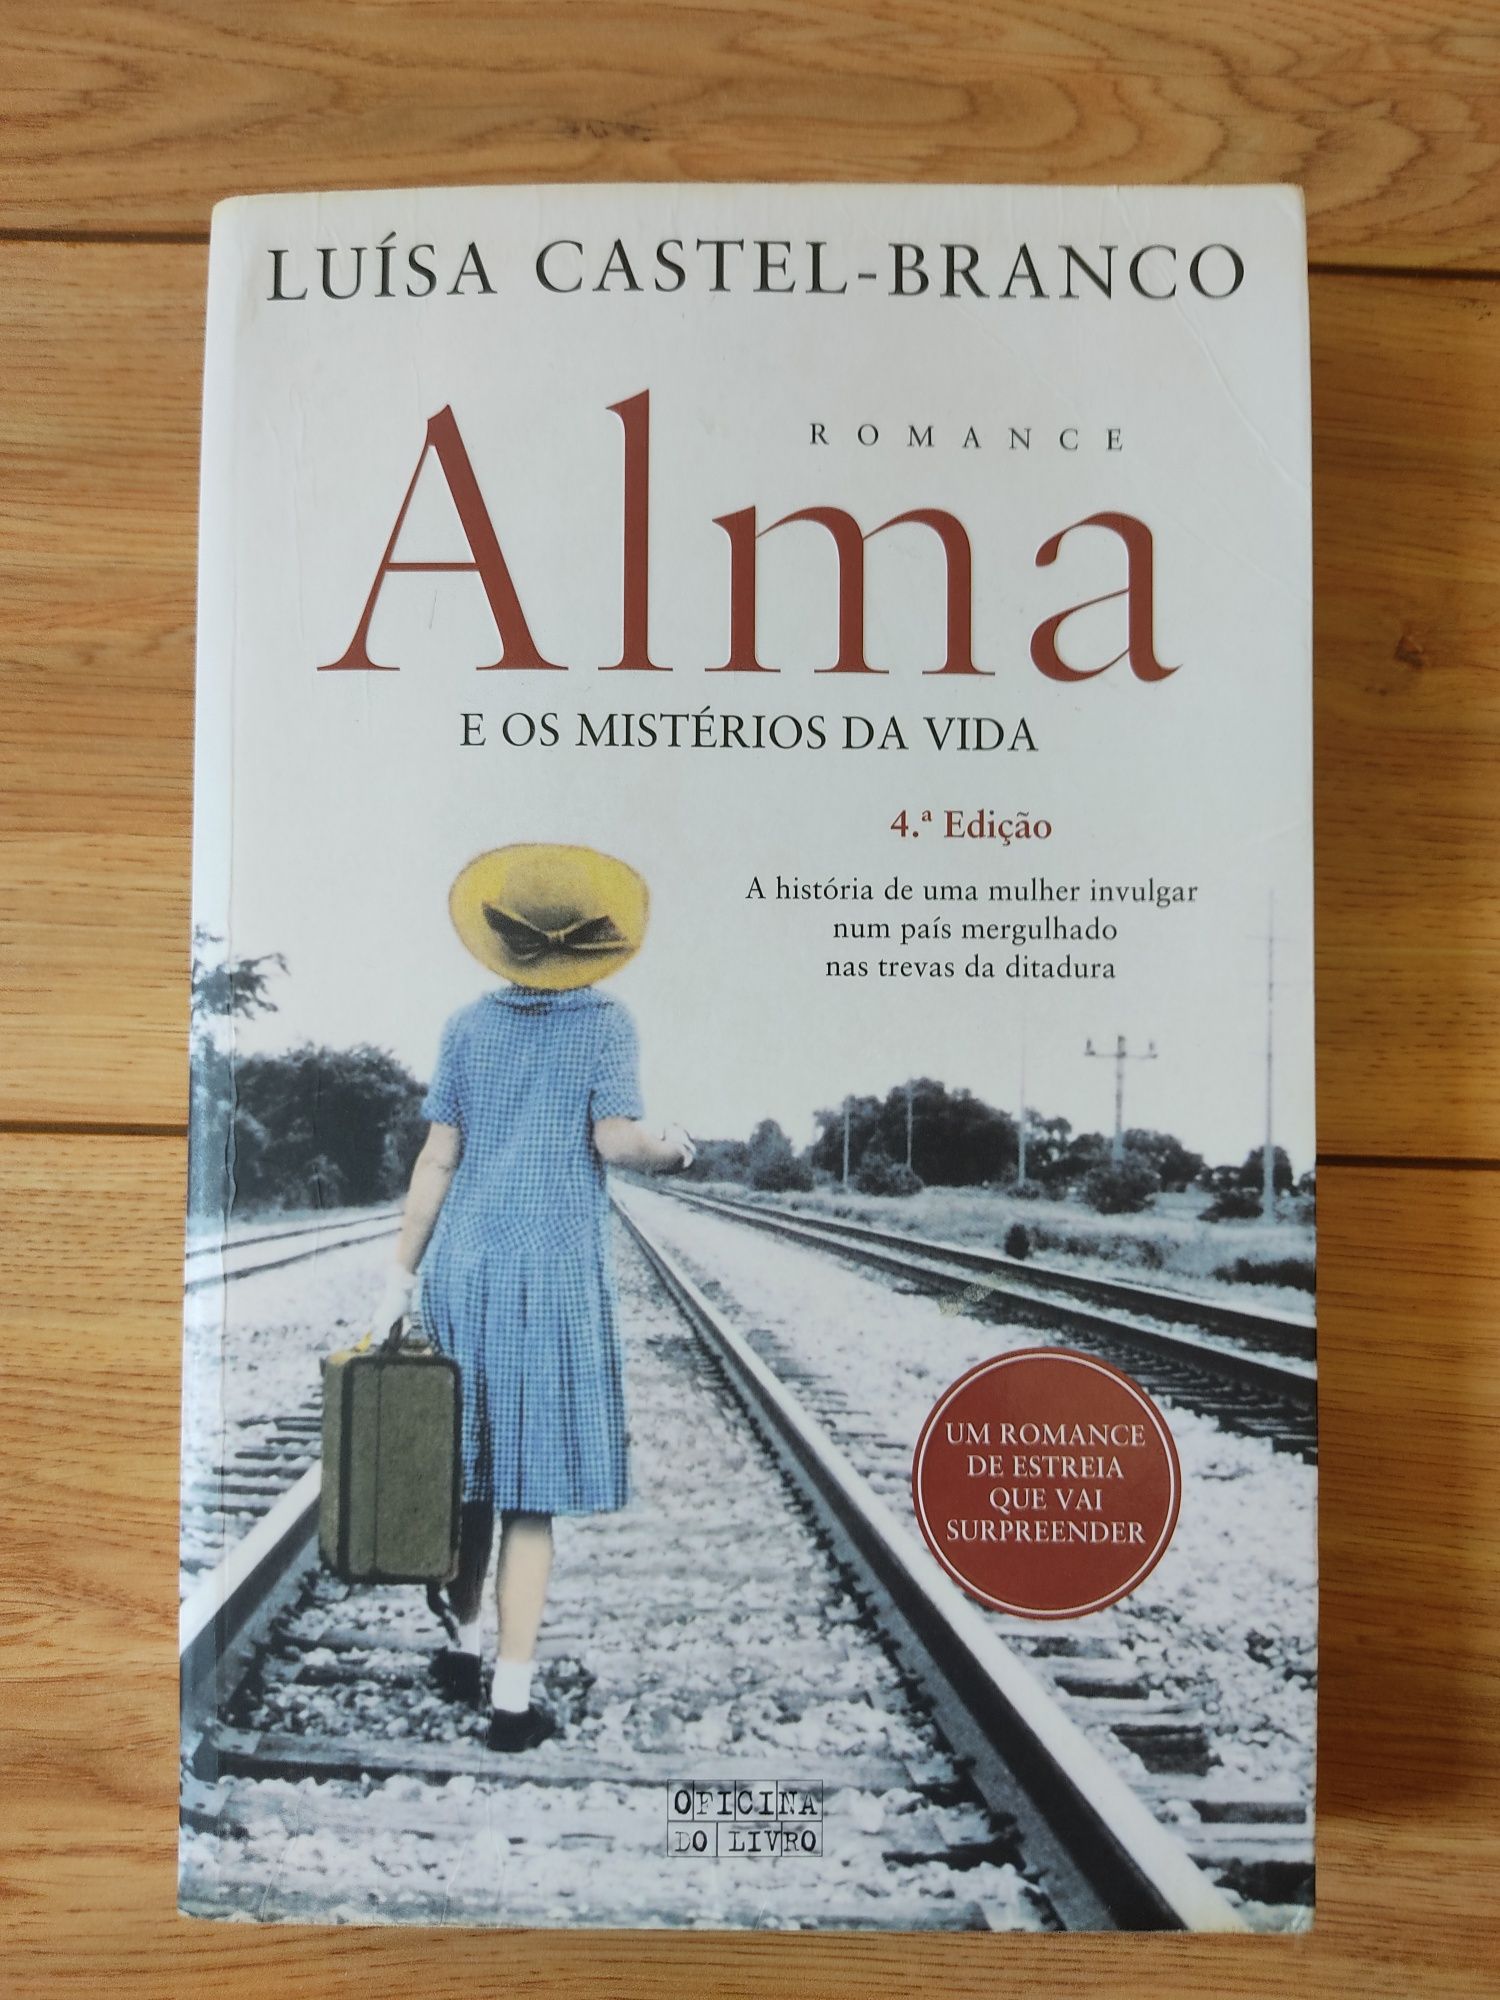 Livro Luísa Castel-Branco "Alma e os mistérios da vida"